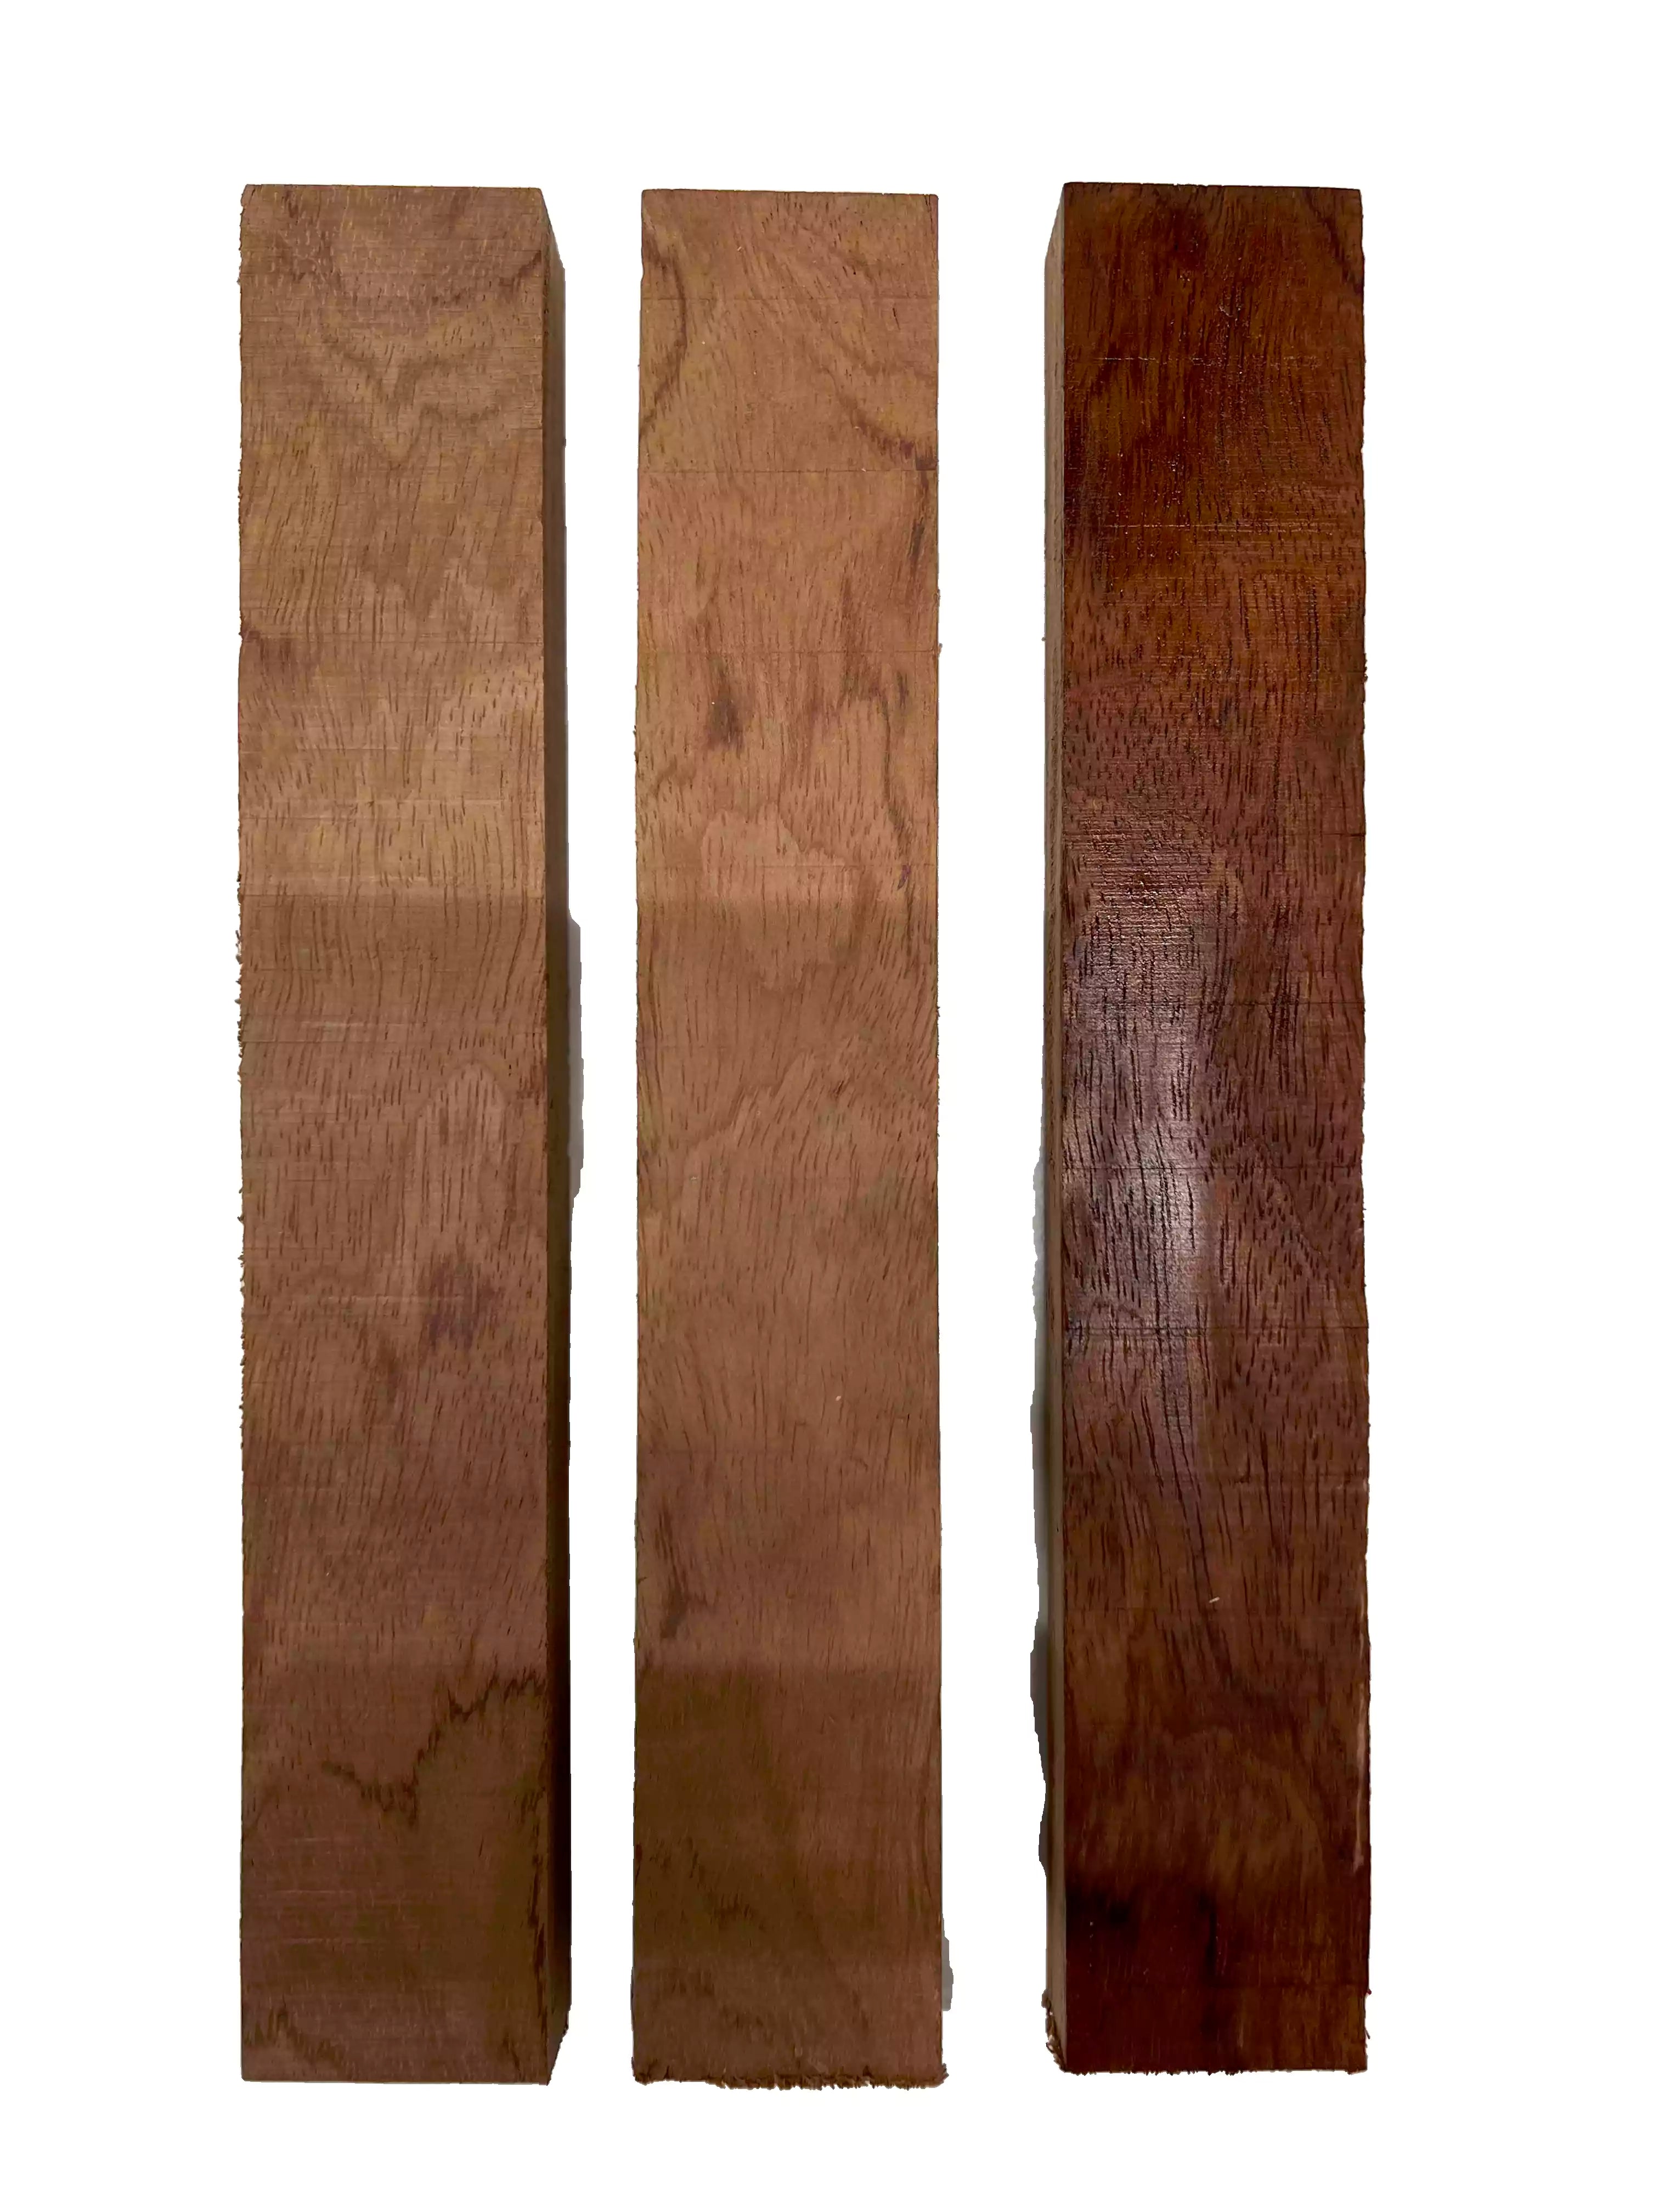 Pack of 3, Bubinga Thin Stock Three Dimensional Lumber Board 12&quot; x 2&quot; x 7/8&quot; 